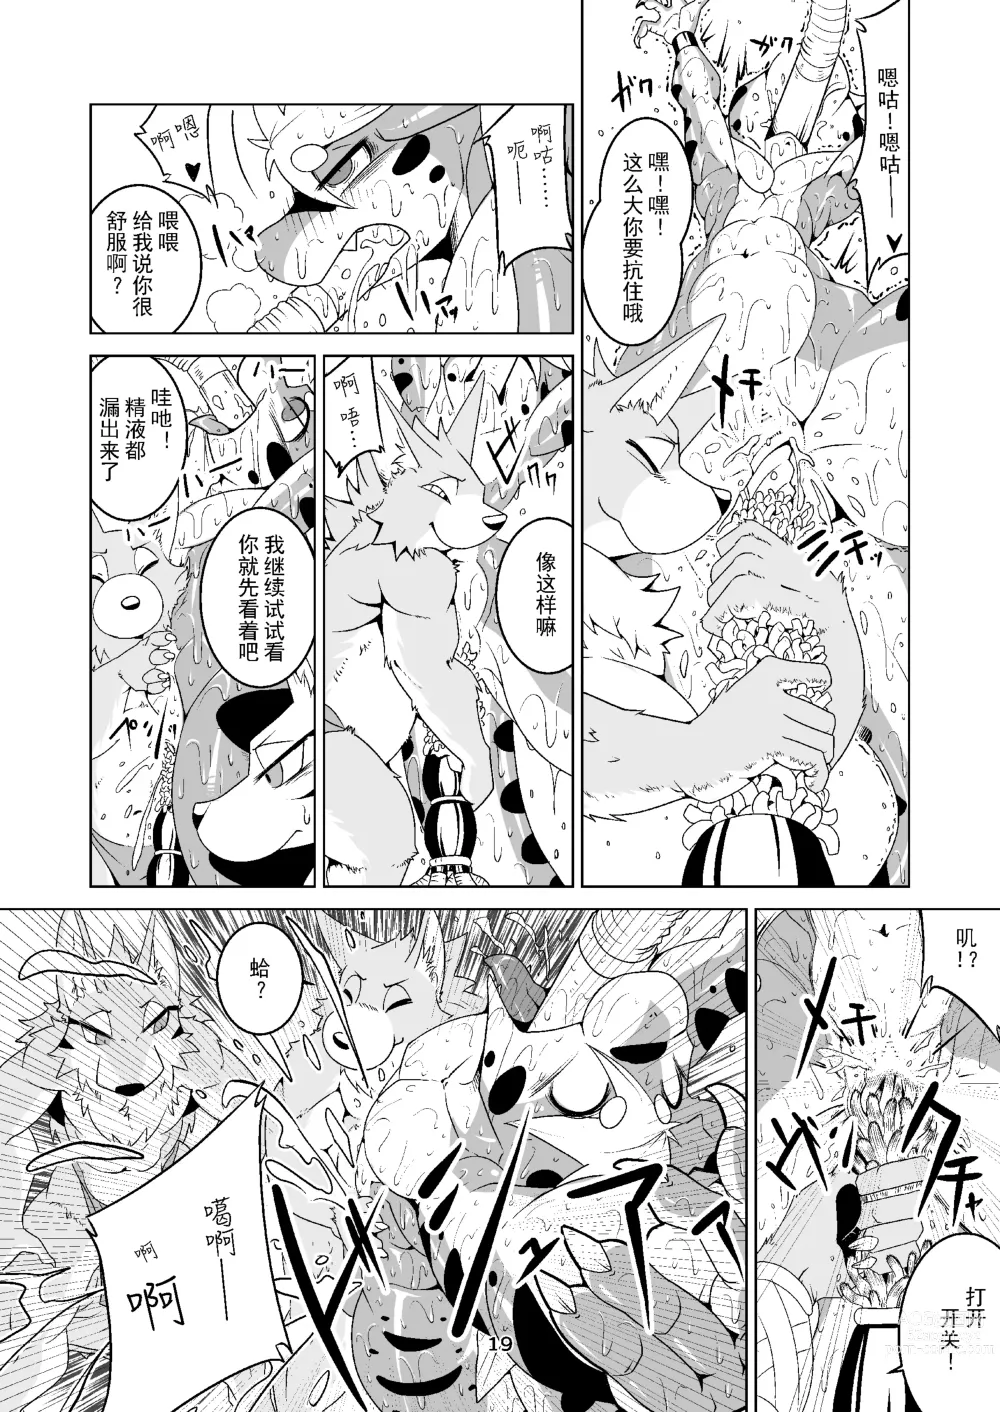 Page 19 of doujinshi Return World 5